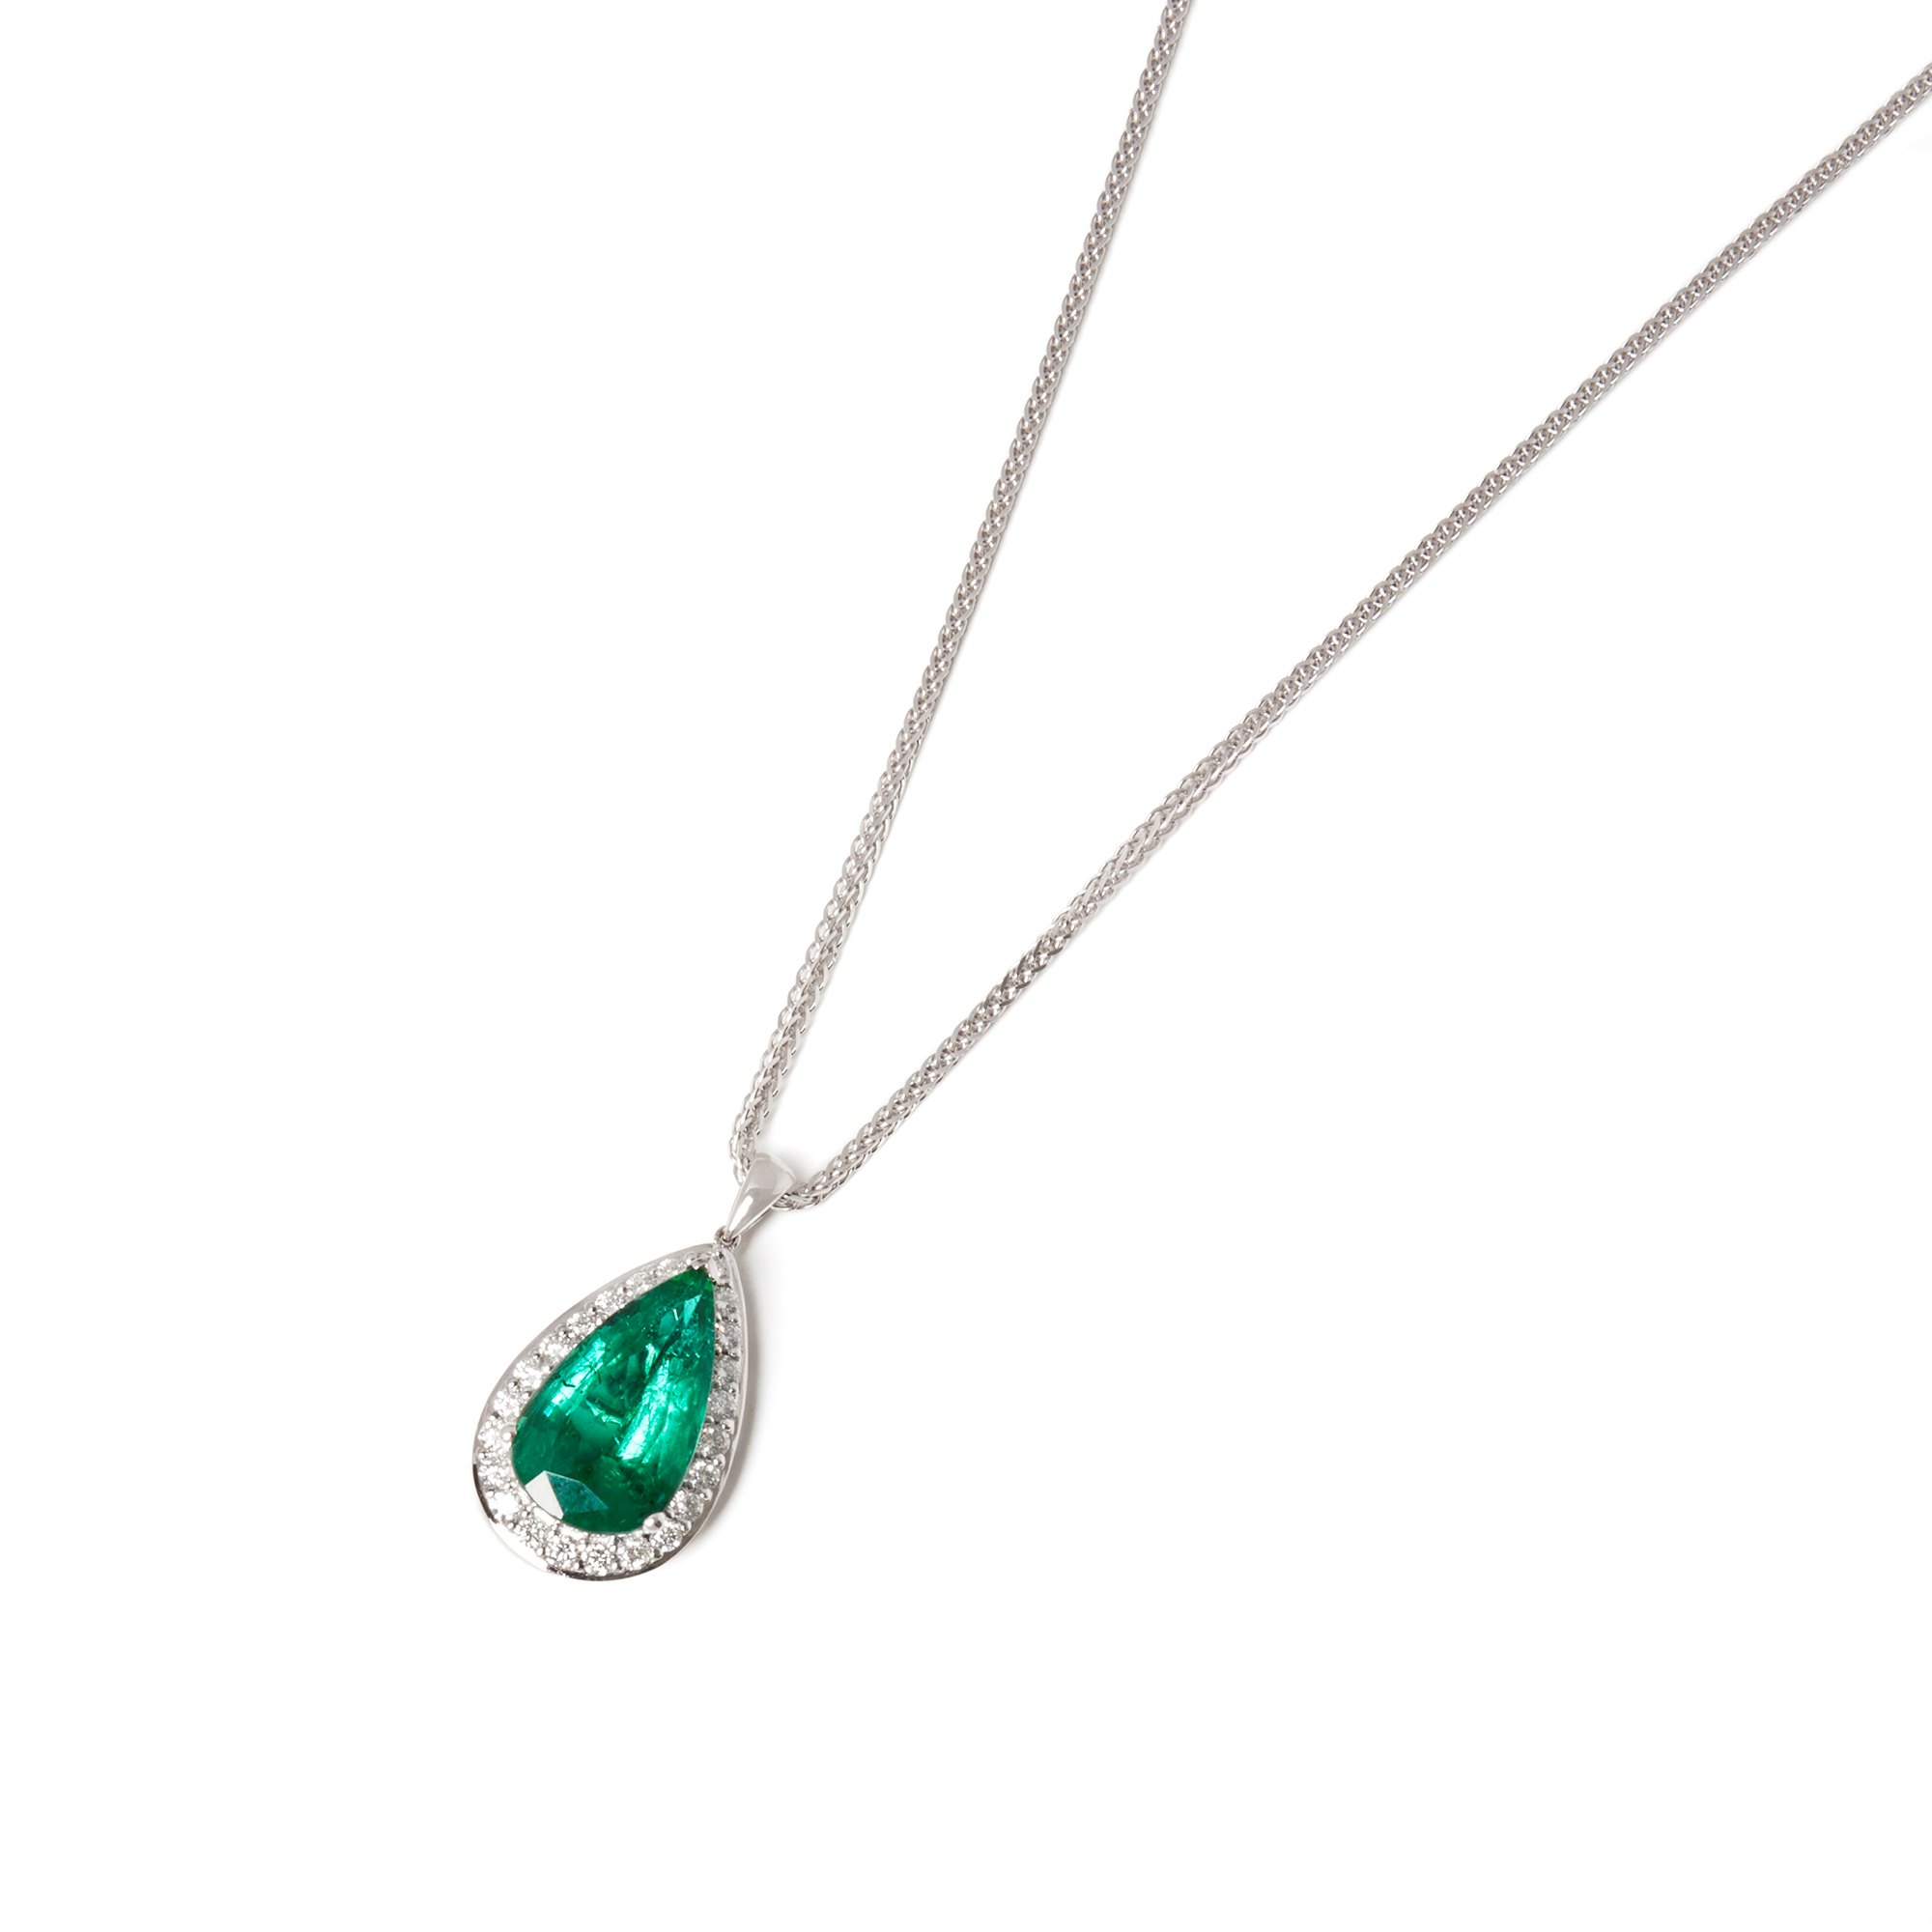 David Jerome 18k White Gold Emerald and Diamond Pendant